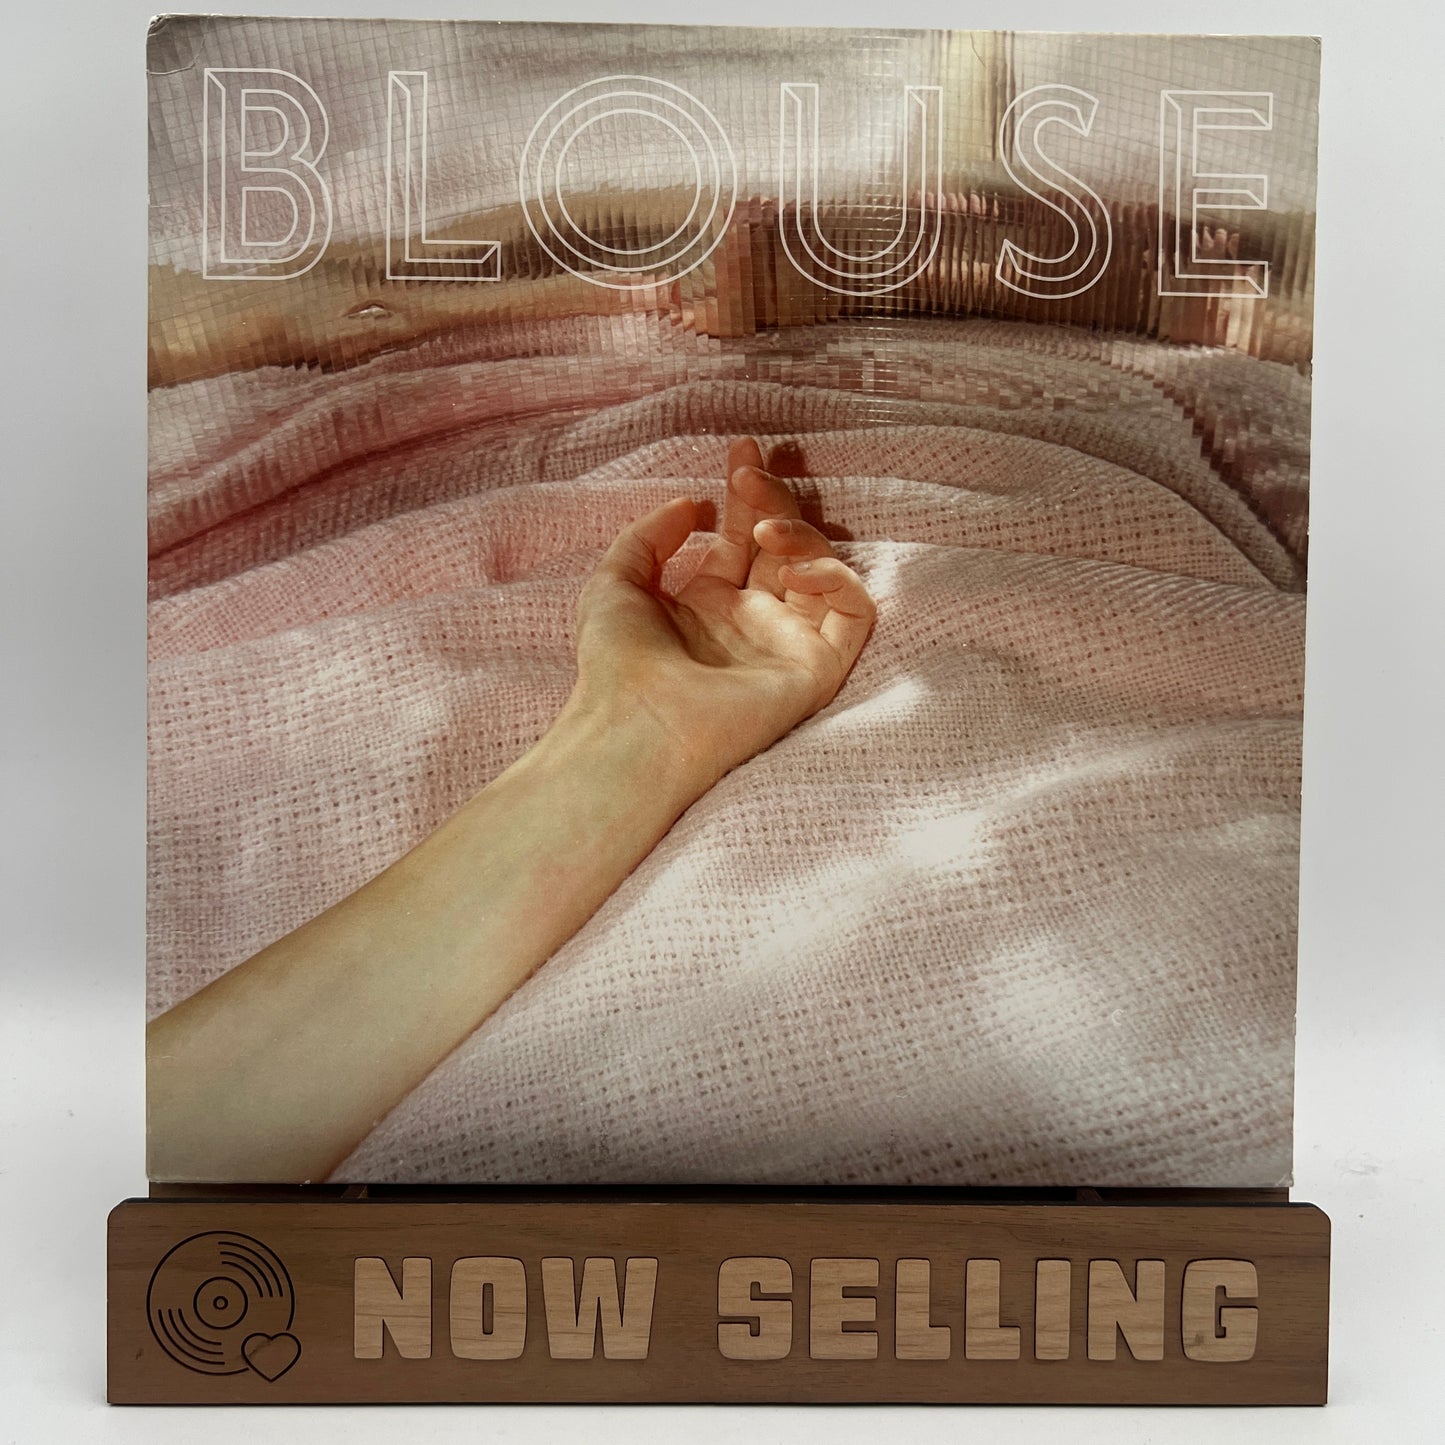 Blouse - Blouse Self Titled Vinyl LP Black